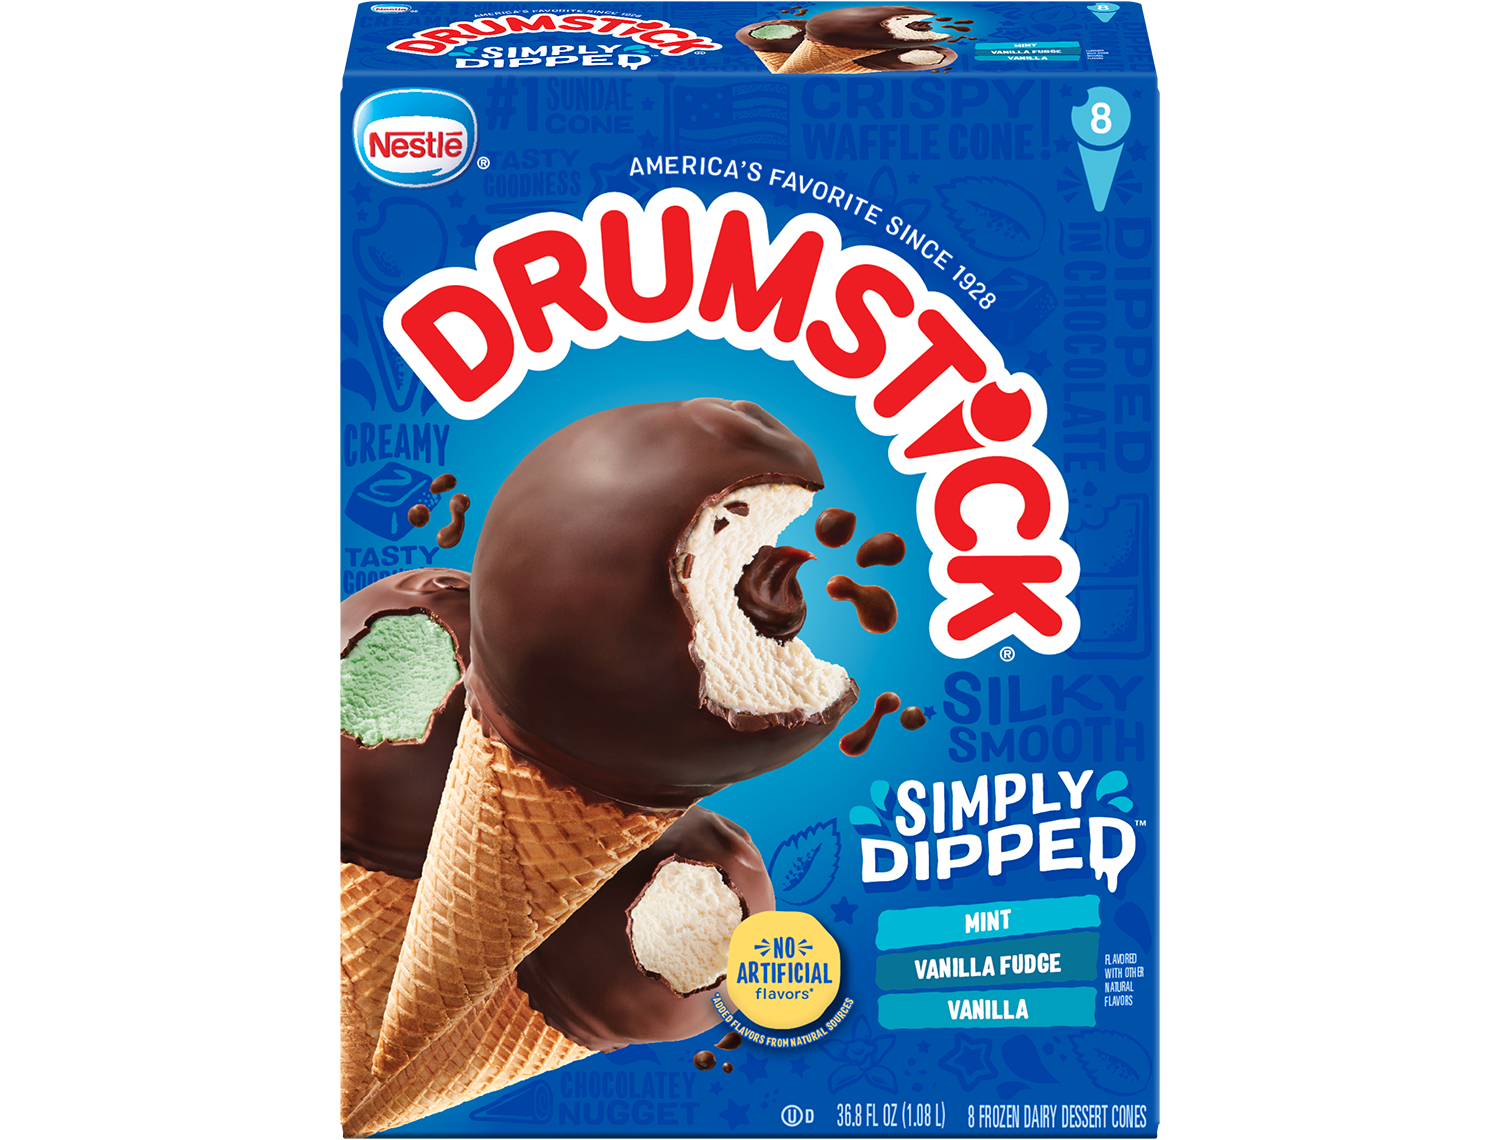 Drumstick simply dipped mint, vanilla fudge and vanilla